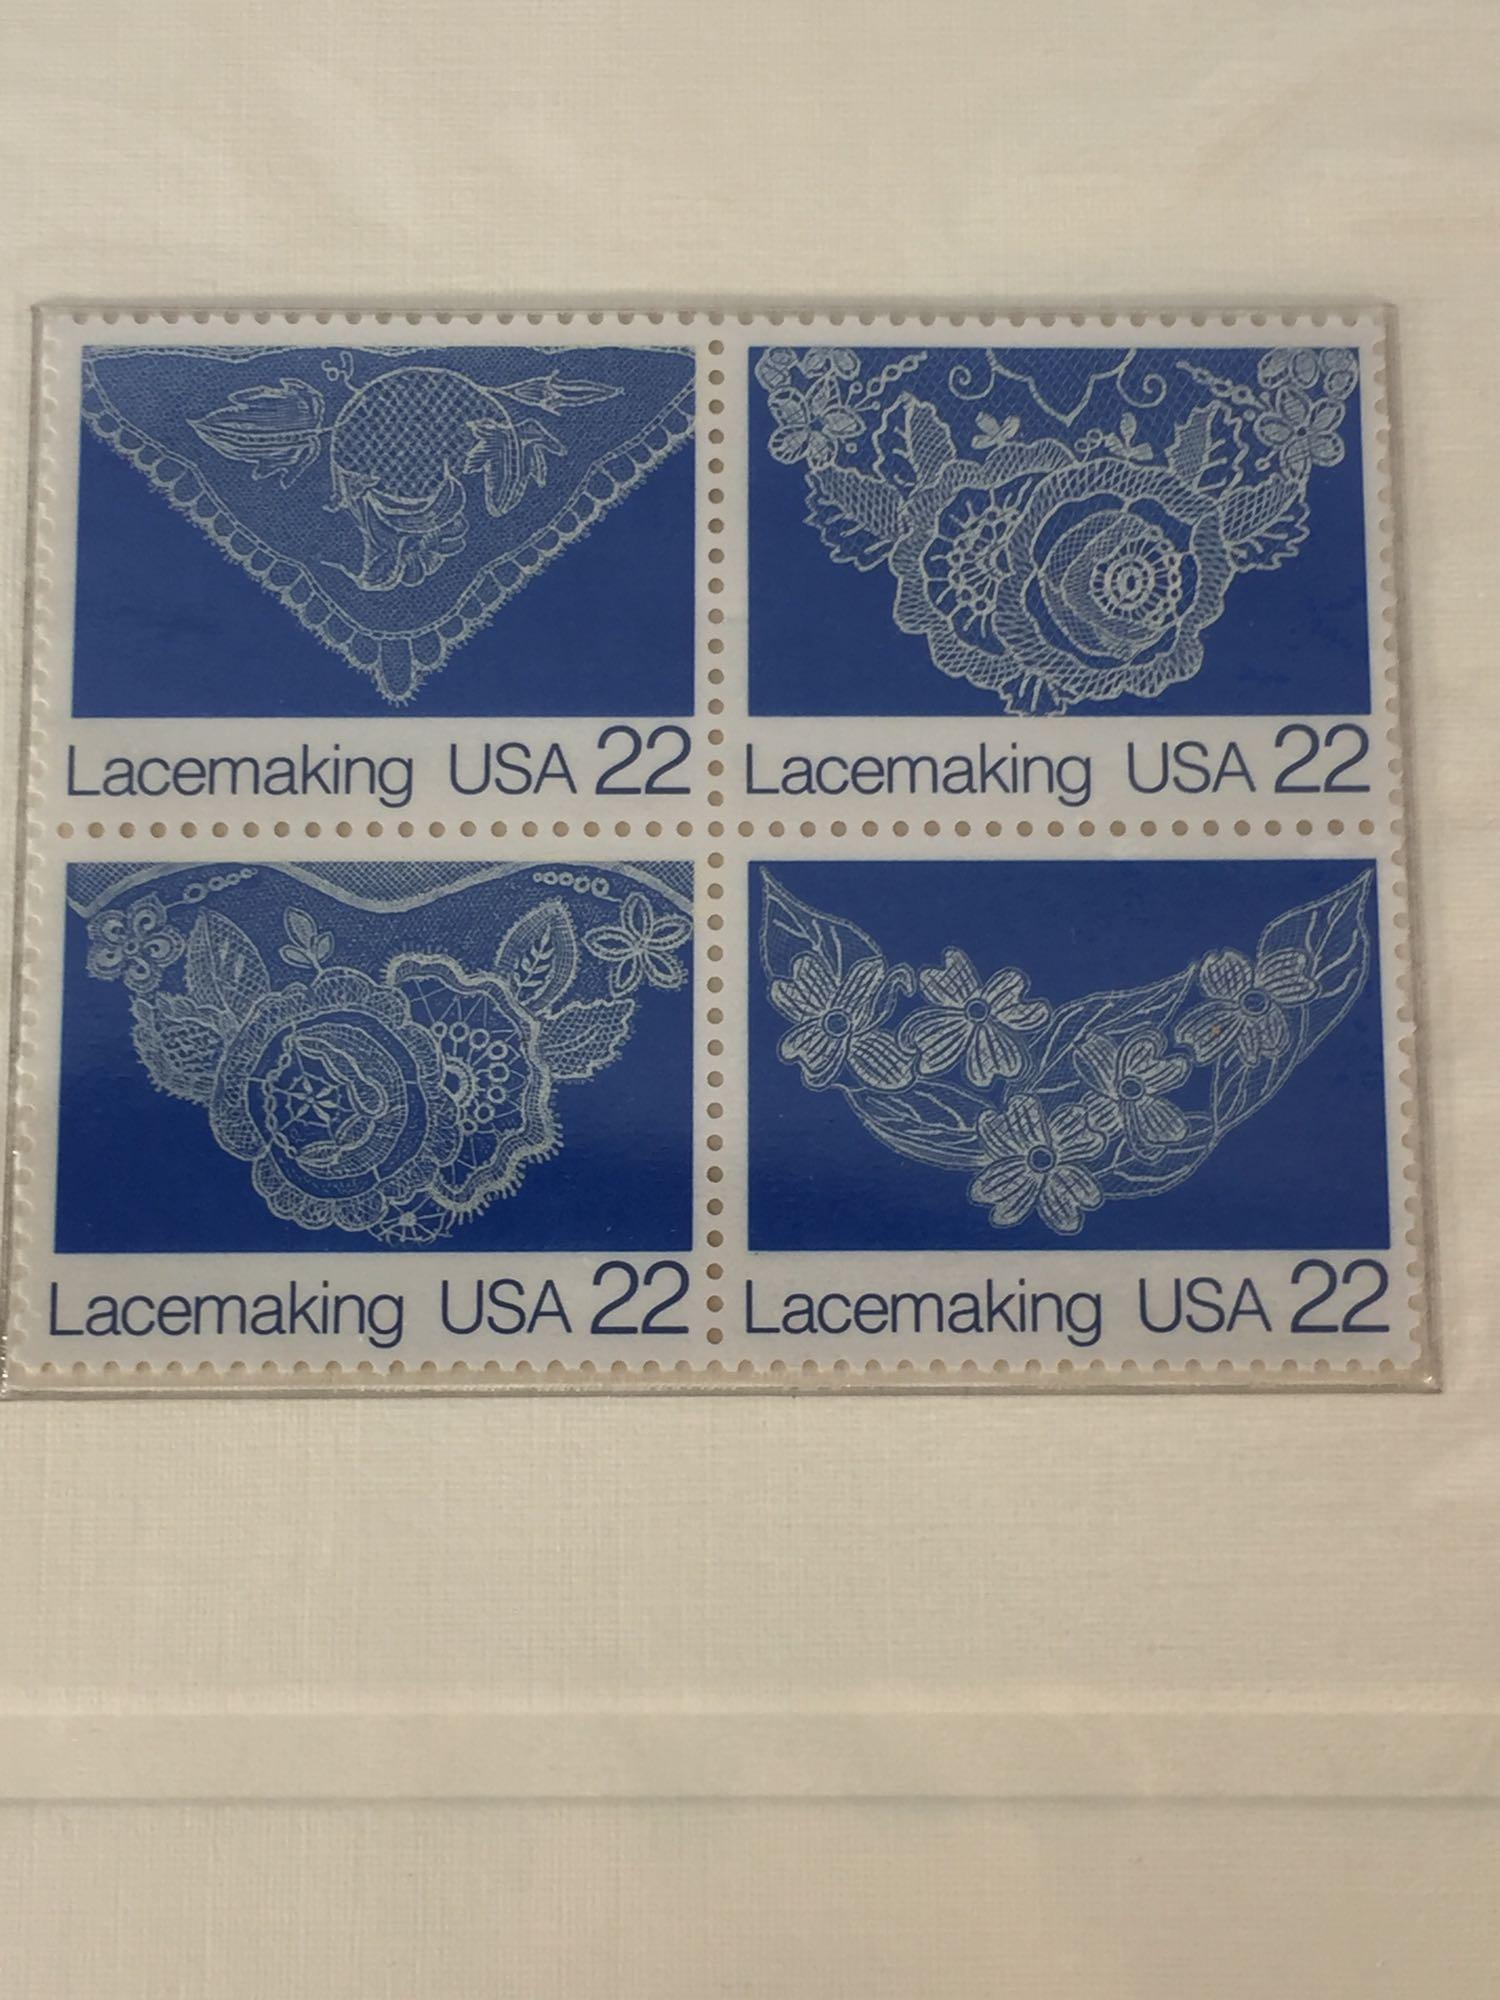 US Commemorative Stamp Collection Album